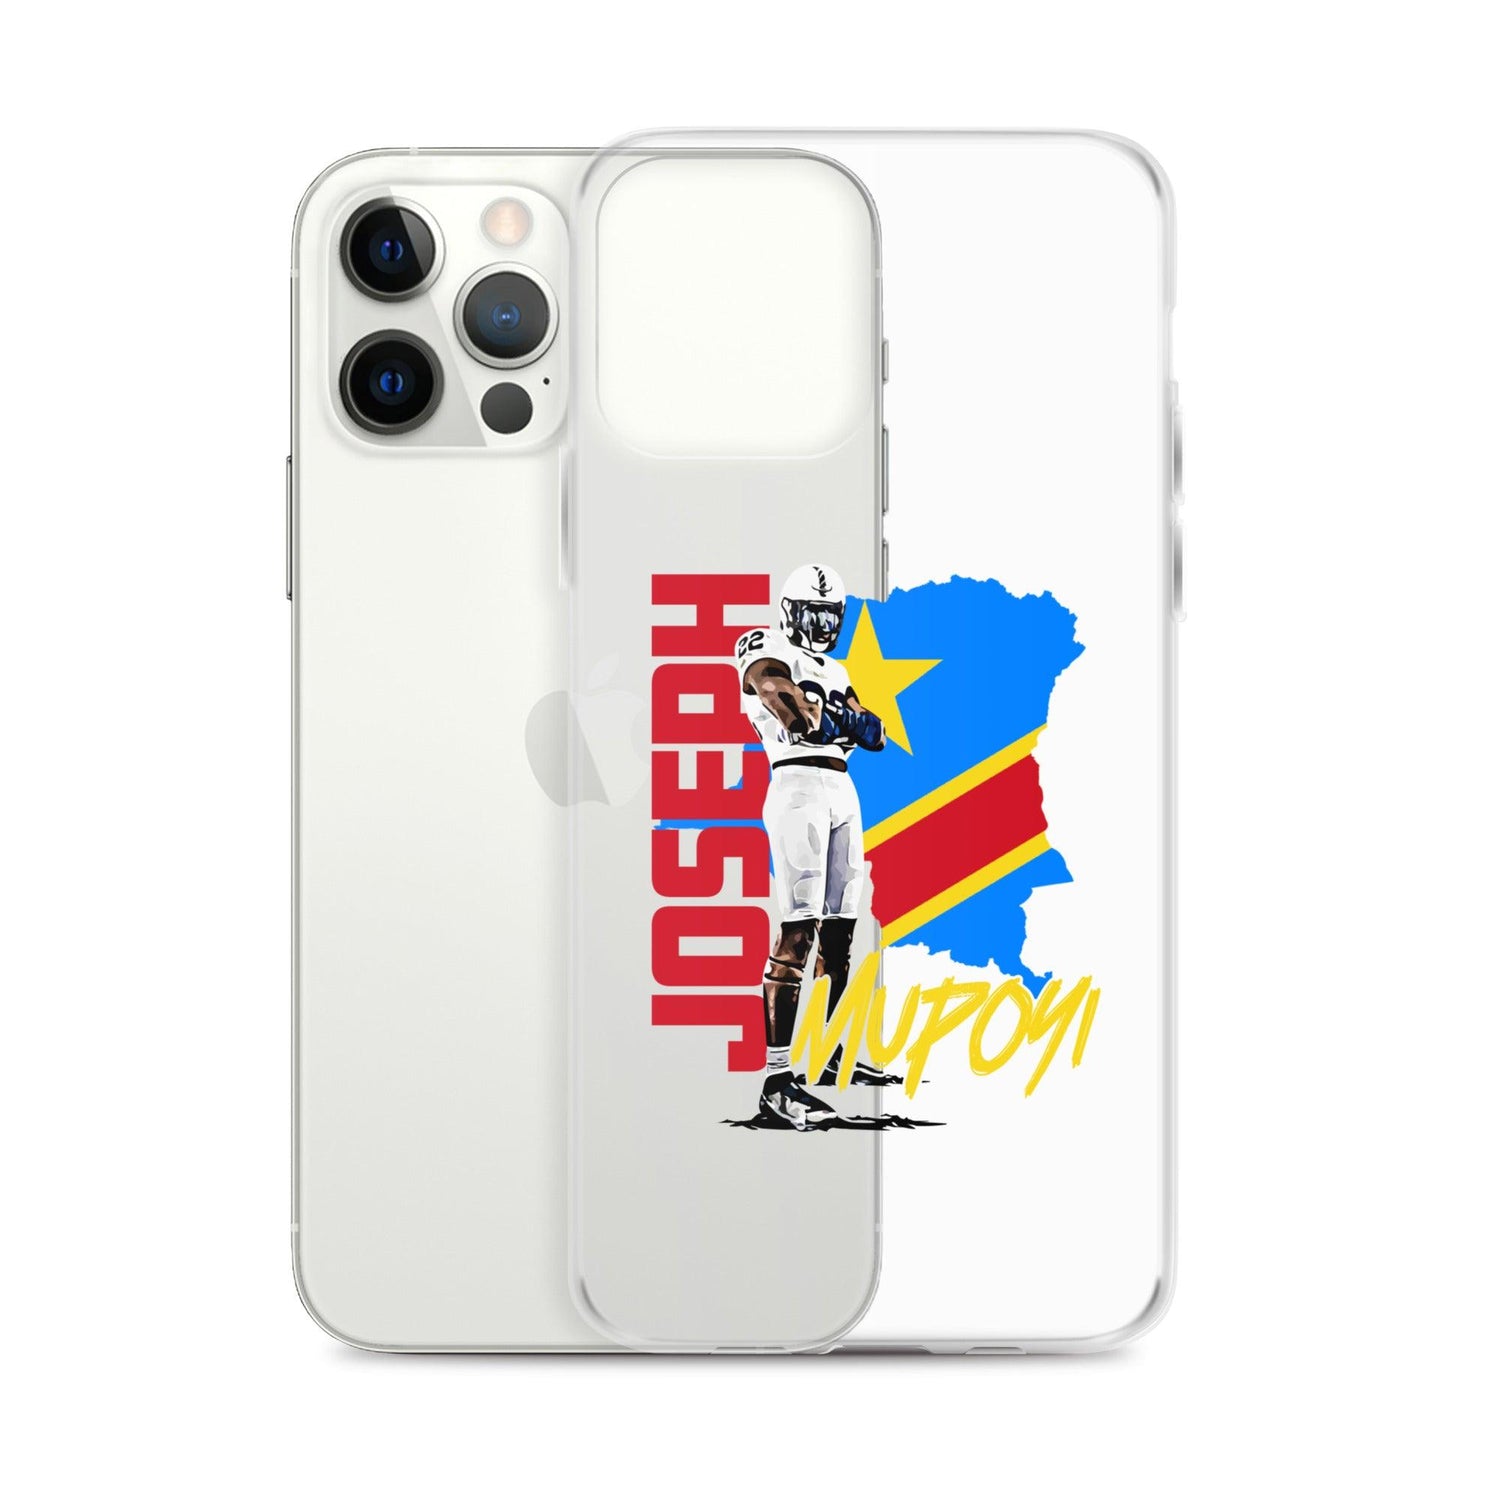 Joseph Mupoyi "Gameday" iPhone Case - Fan Arch